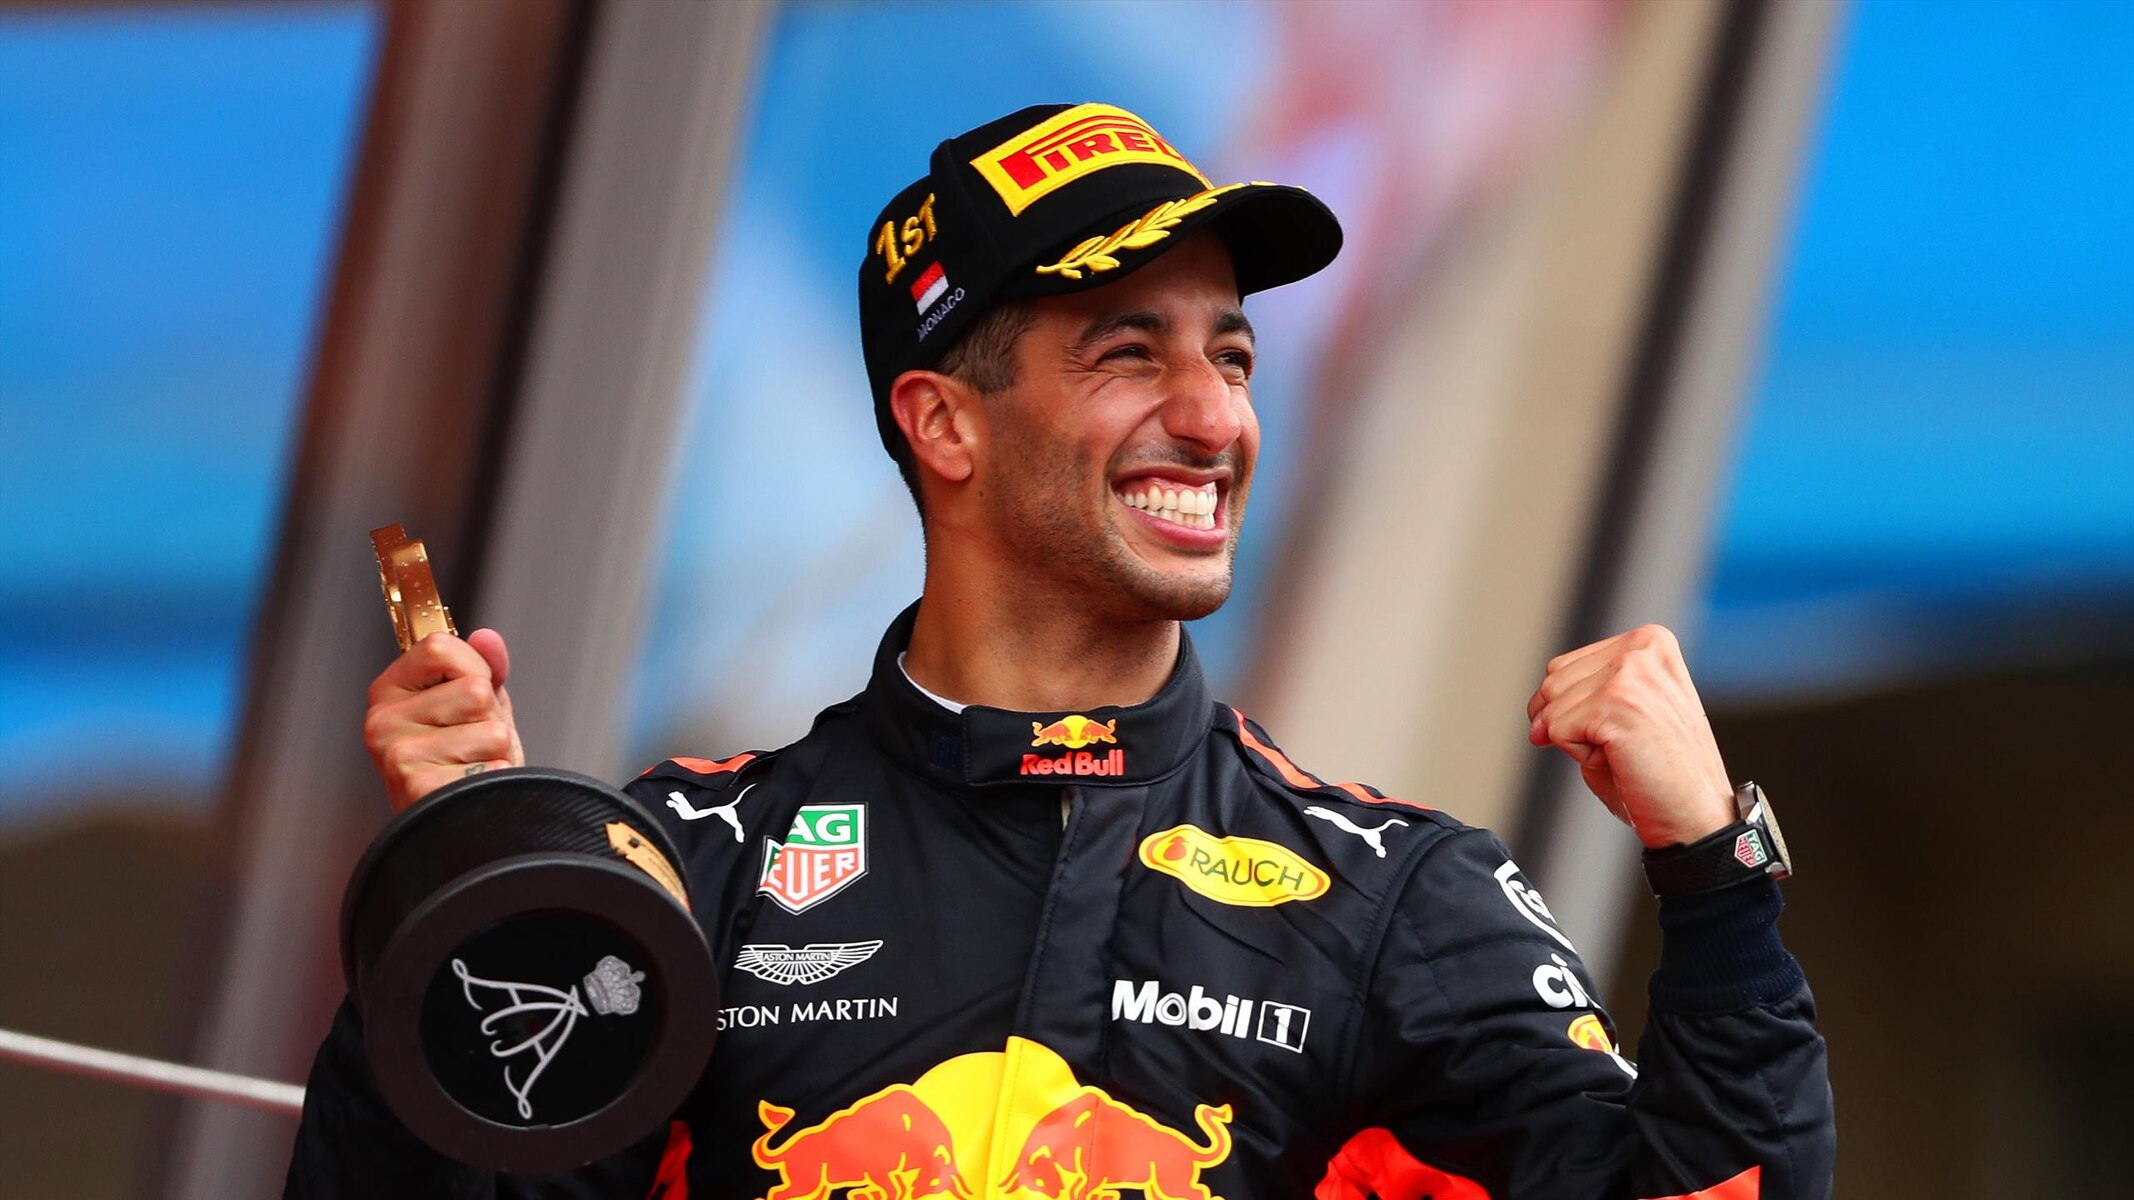 21 Captivating Facts About Daniel Ricciardo - Facts.net